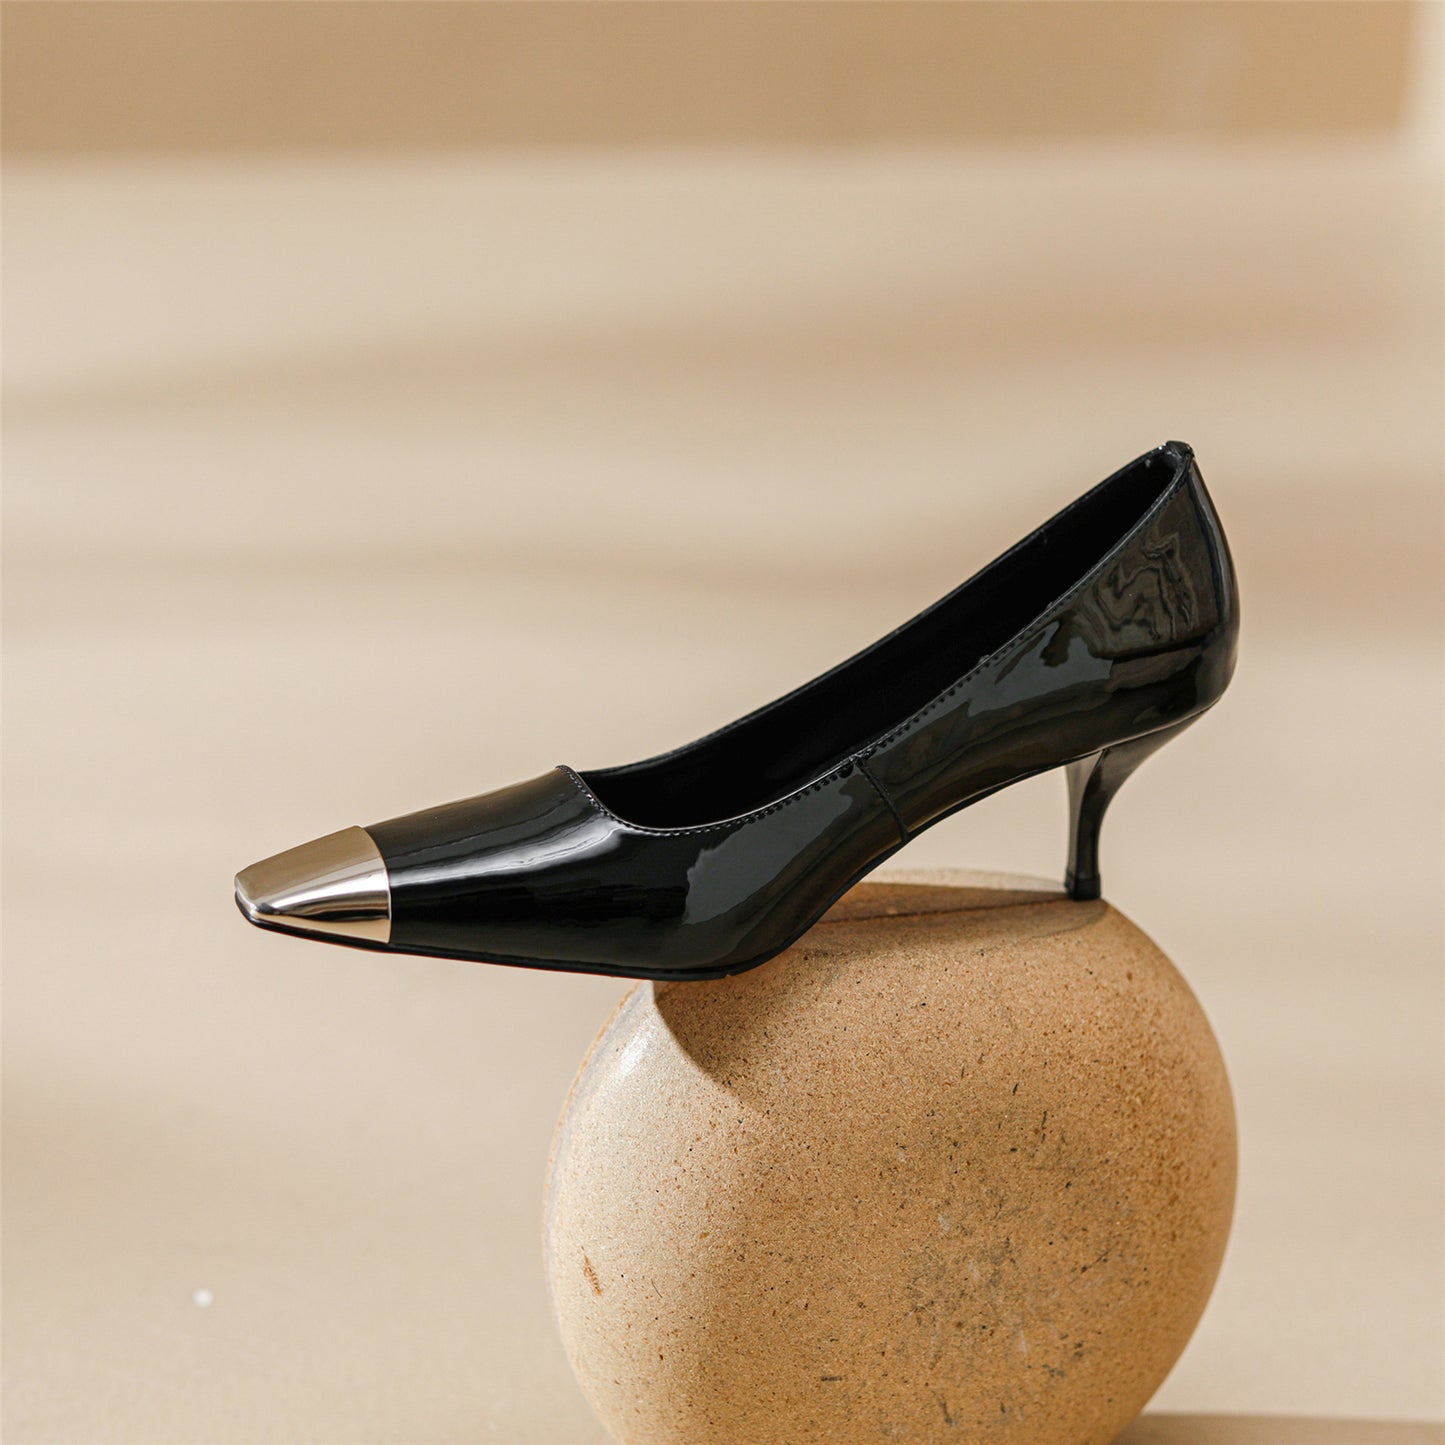 TinaCus Women's Patent Leather Handmade Cap-Toe Exquisite Heel Slip On Pumps Shoes